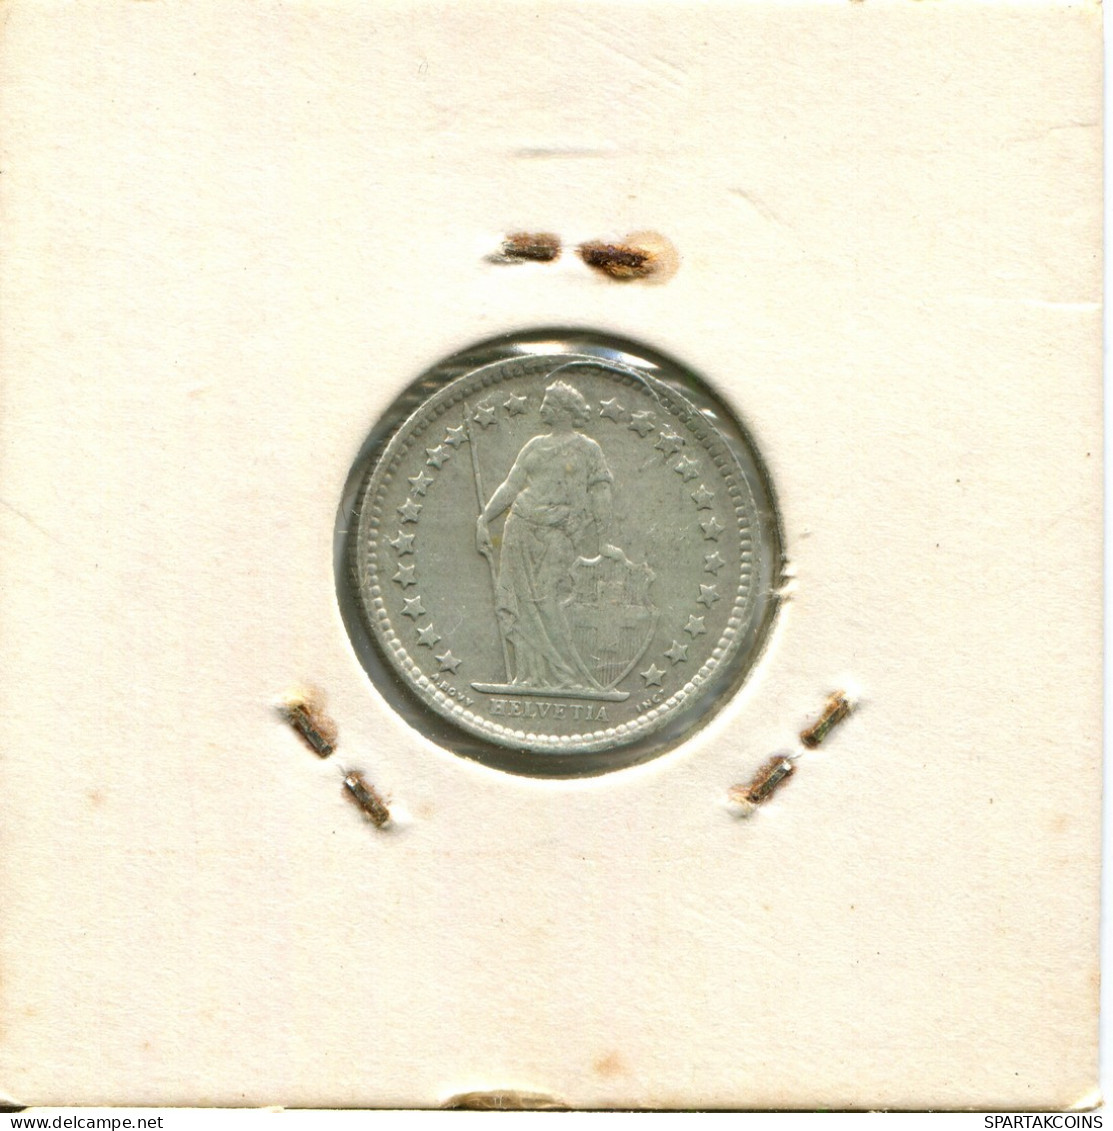 1/2 FRANC 1962 B SUIZA SWITZERLAND Moneda PLATA #AY020.3.E.A - Other & Unclassified